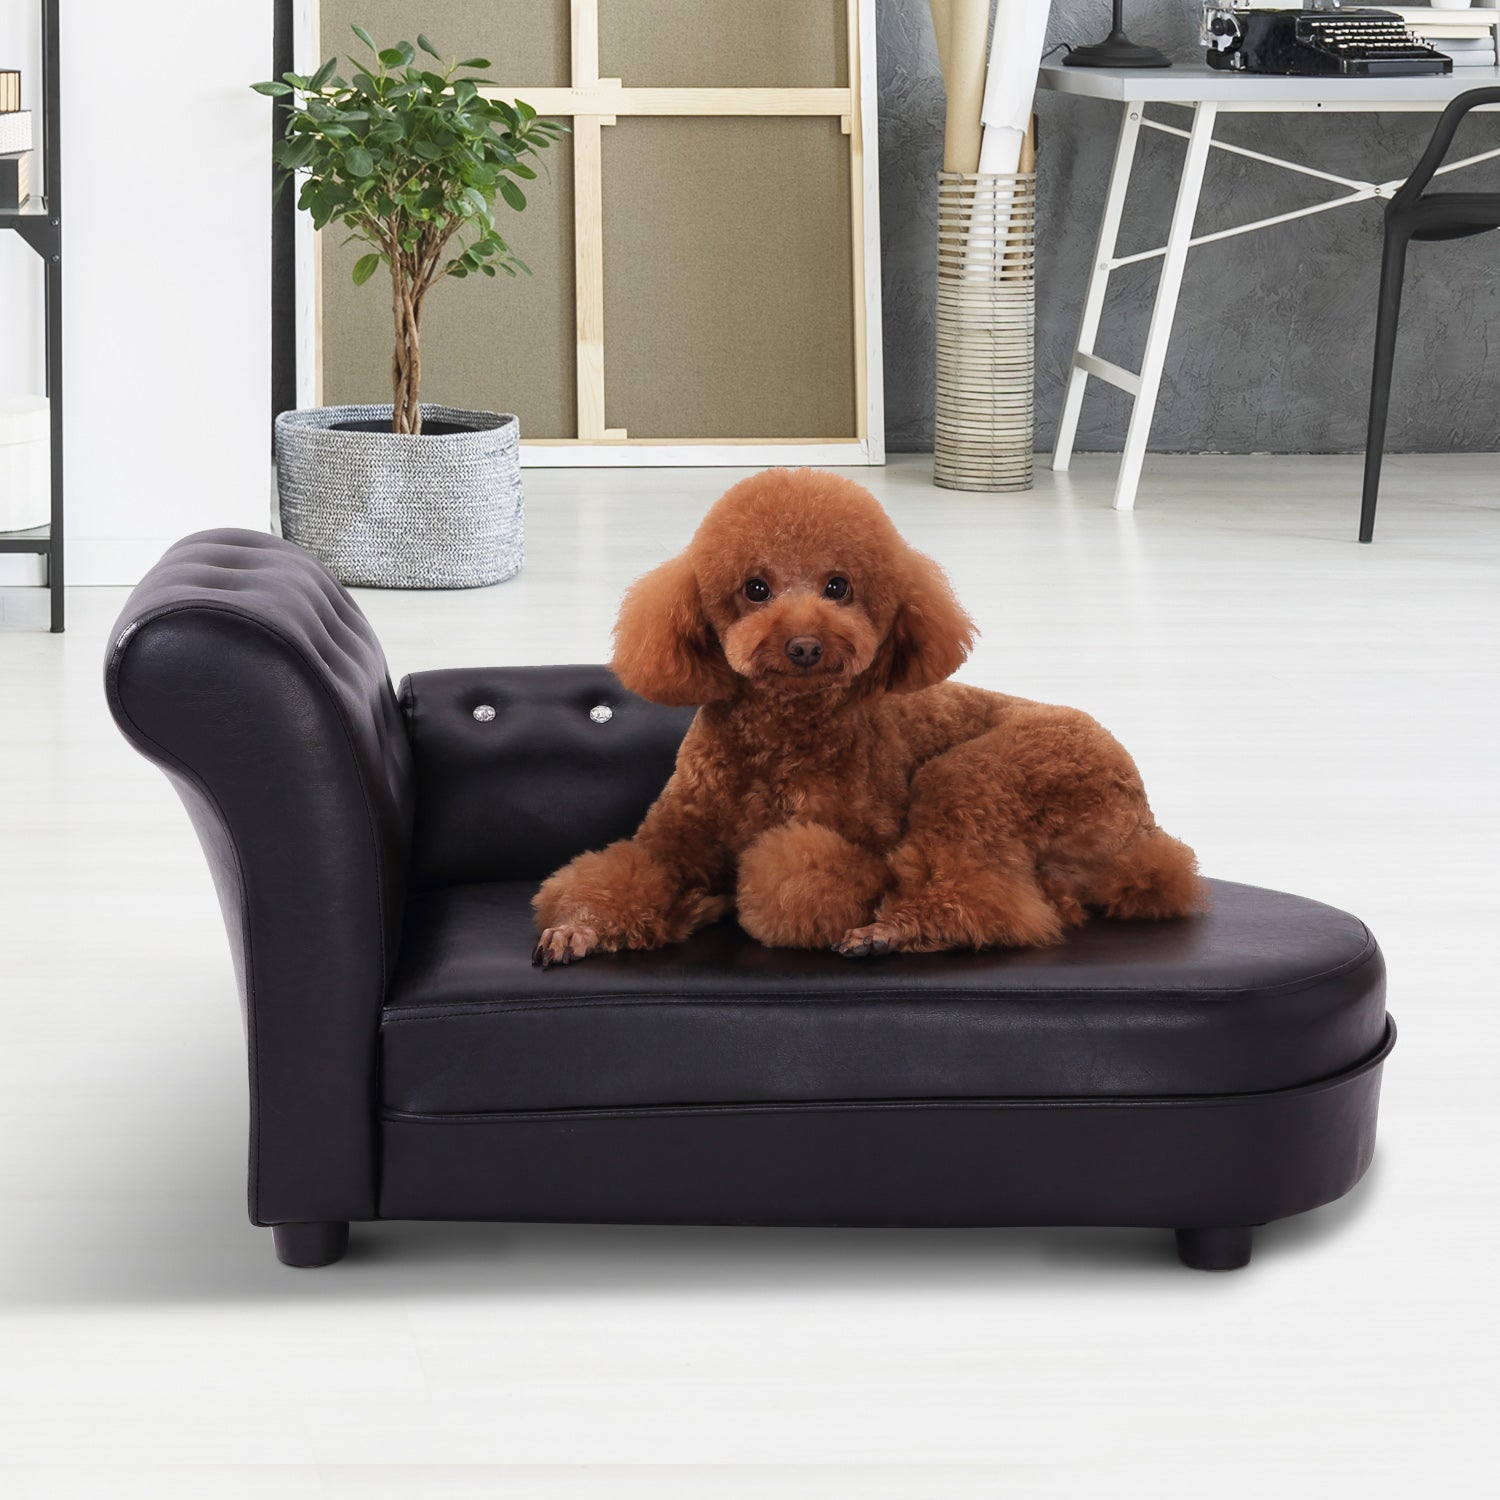 82.5Lx45Wx41.5H cm Pet Sofa-Black